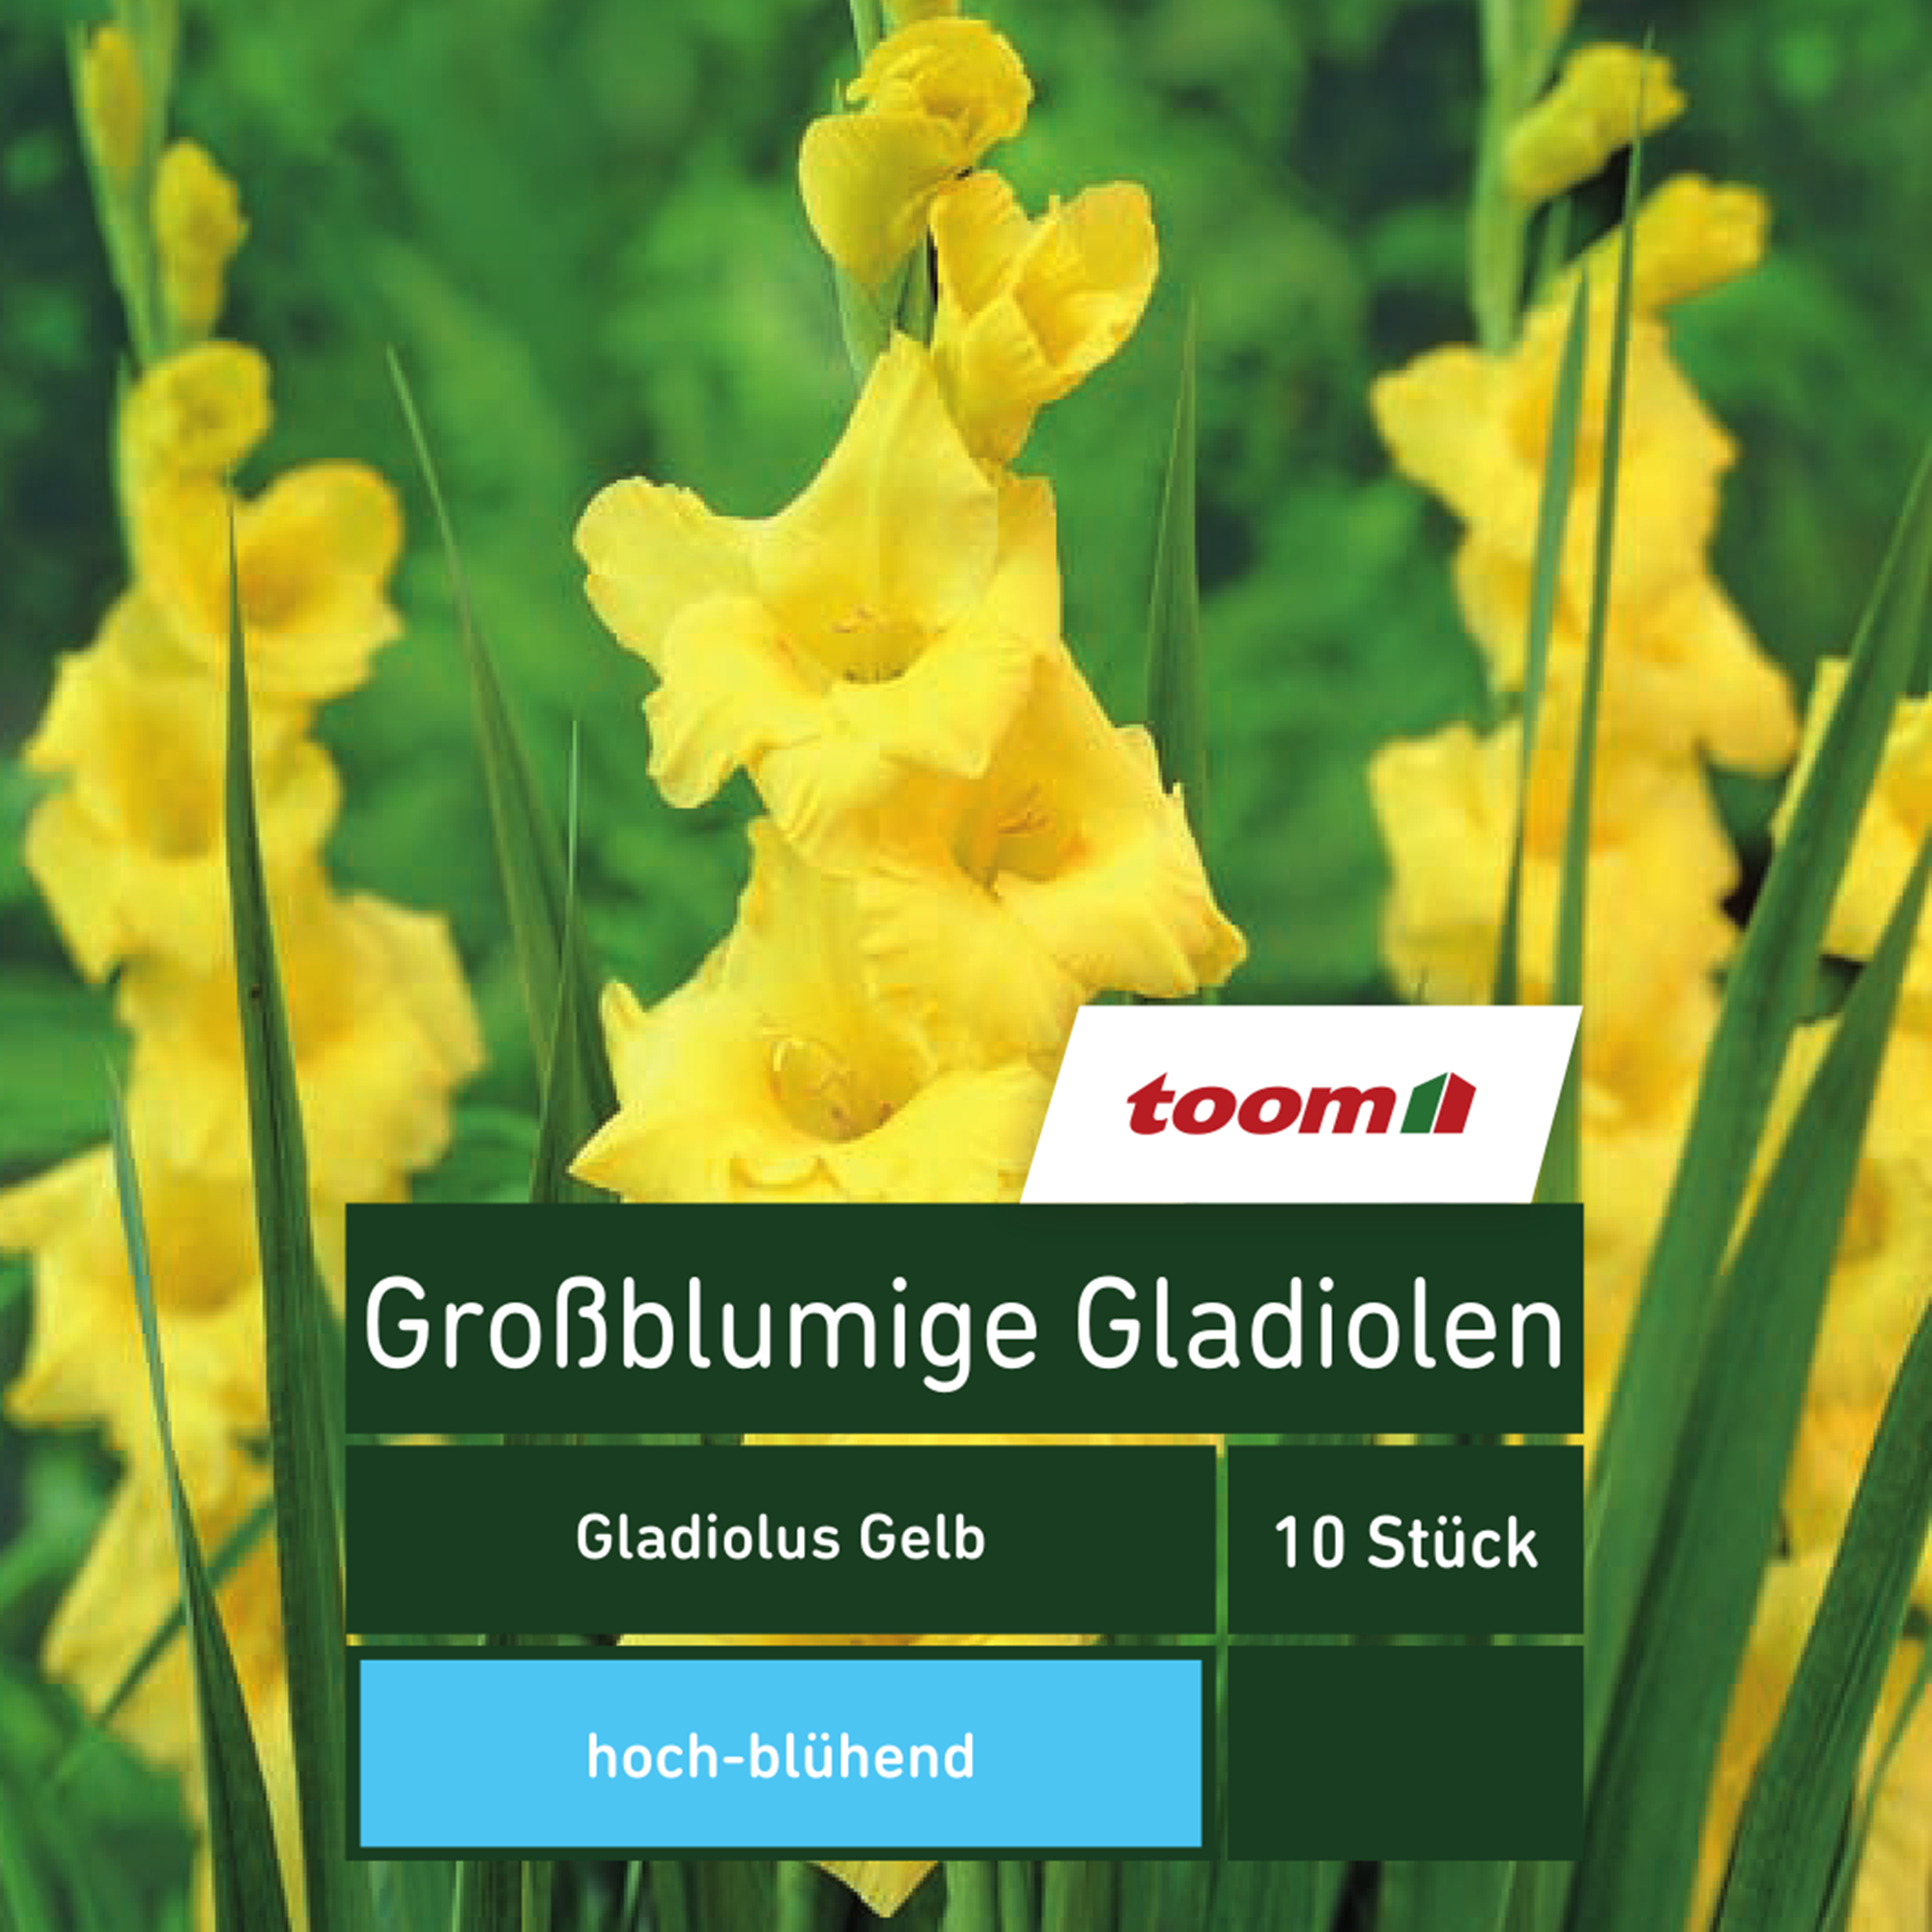 Großblumige Gladiolen 'Gladiolus', 10 Stück, gelb + product picture